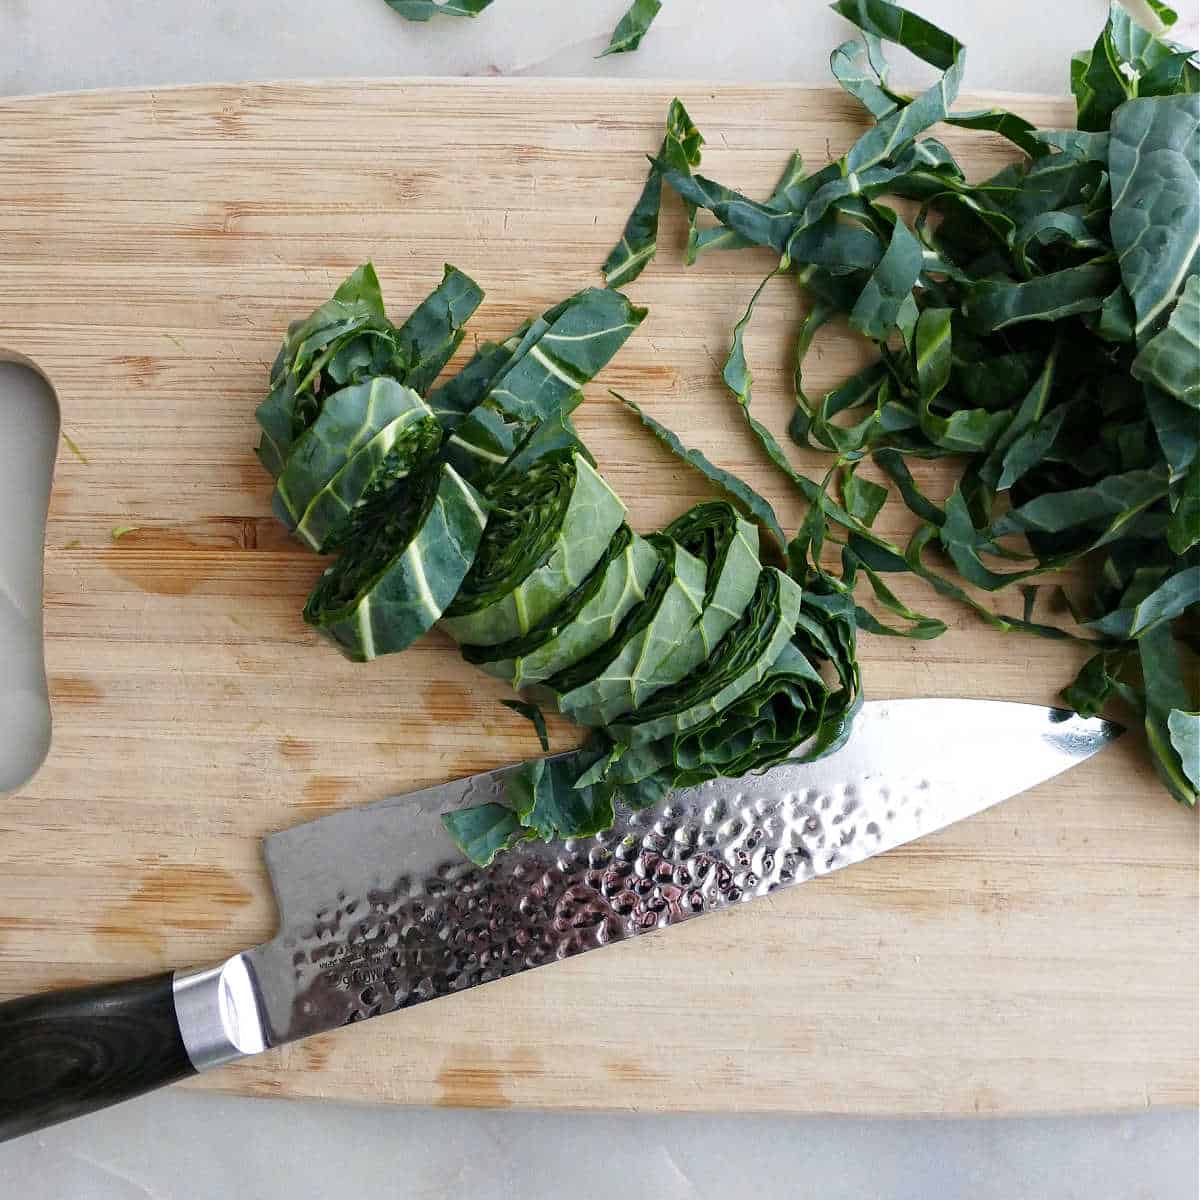 collard greens cut into small pieces on a cutting board